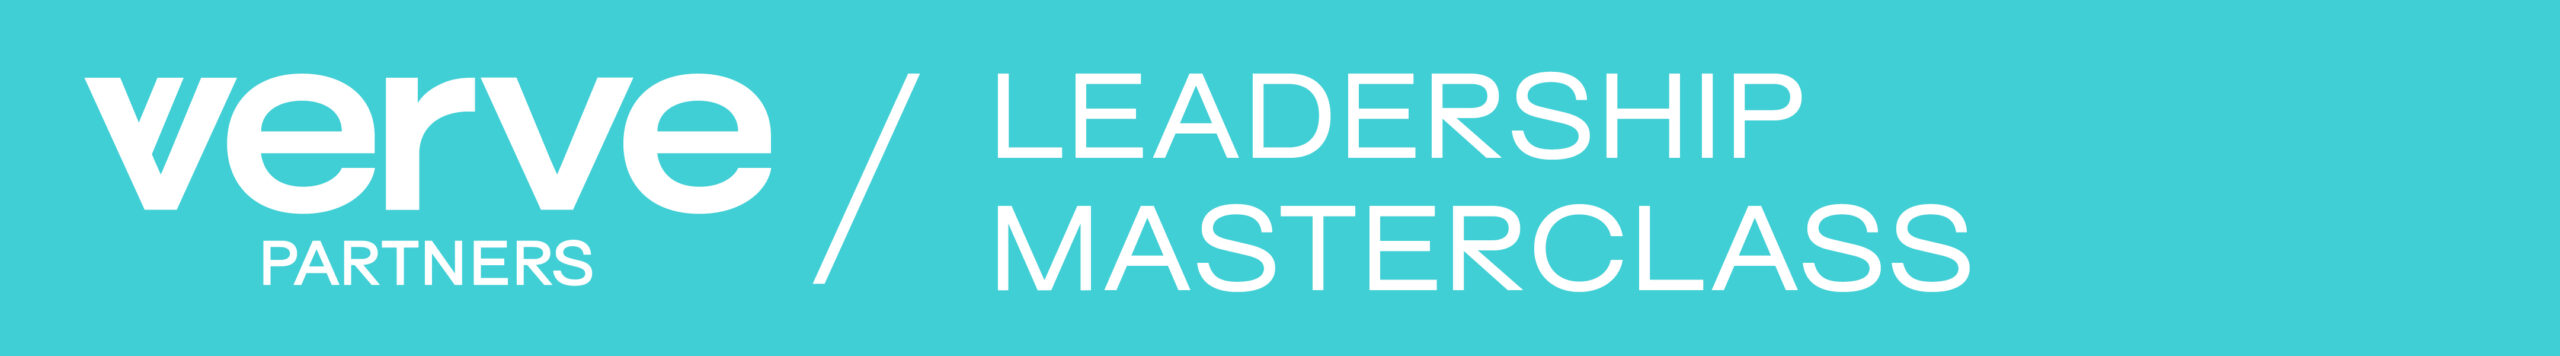 Verve Partners Leadership Masterclass